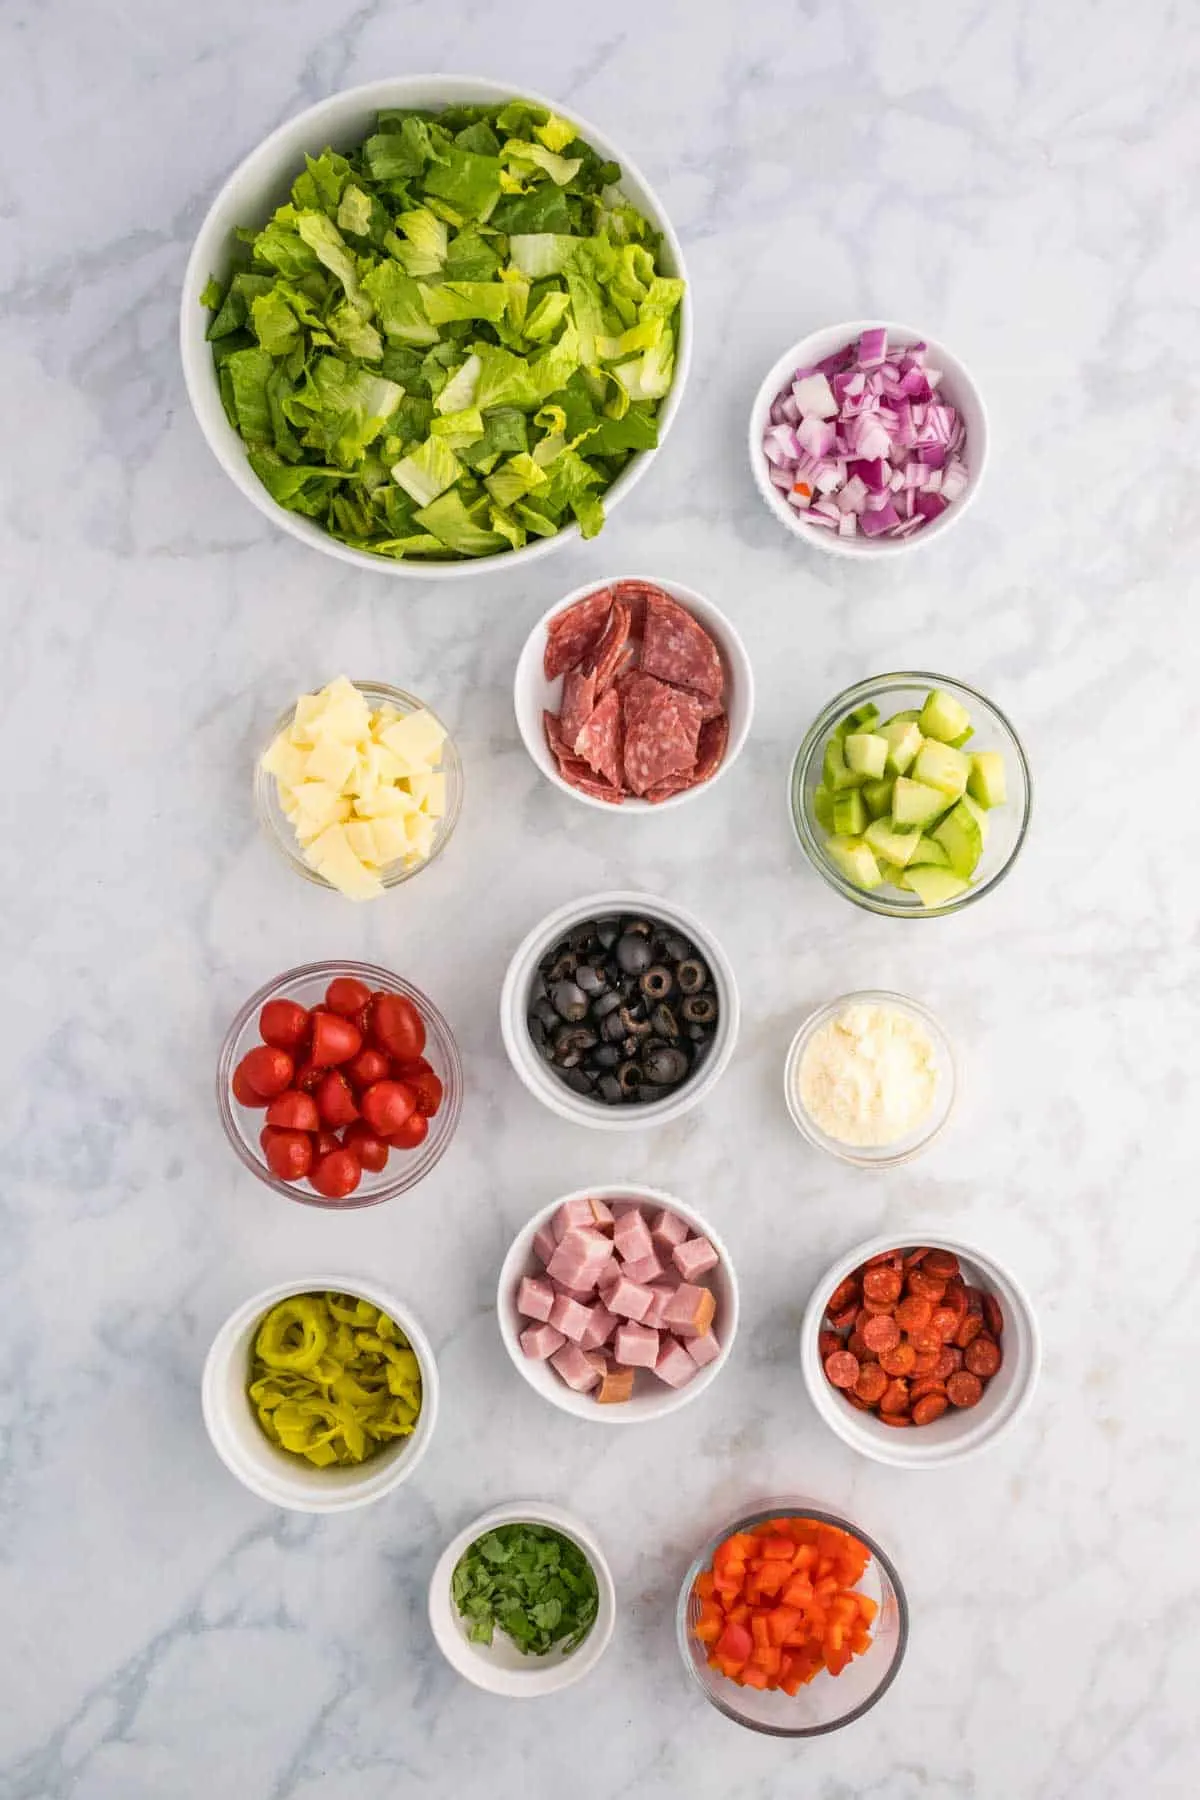 Italian sub salad ingredients in prep bowls